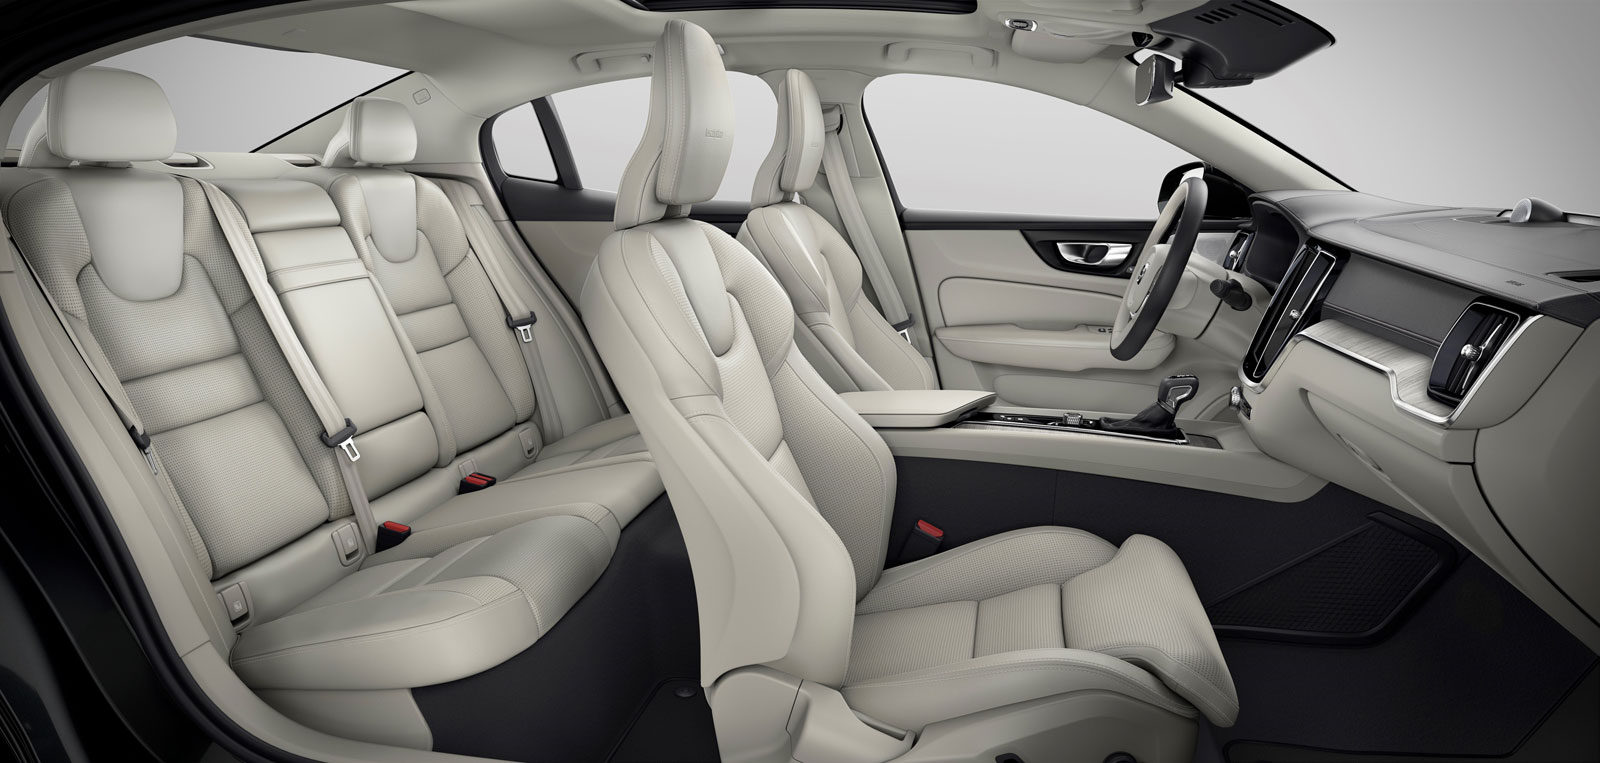 Volvo V60 interior - Seats